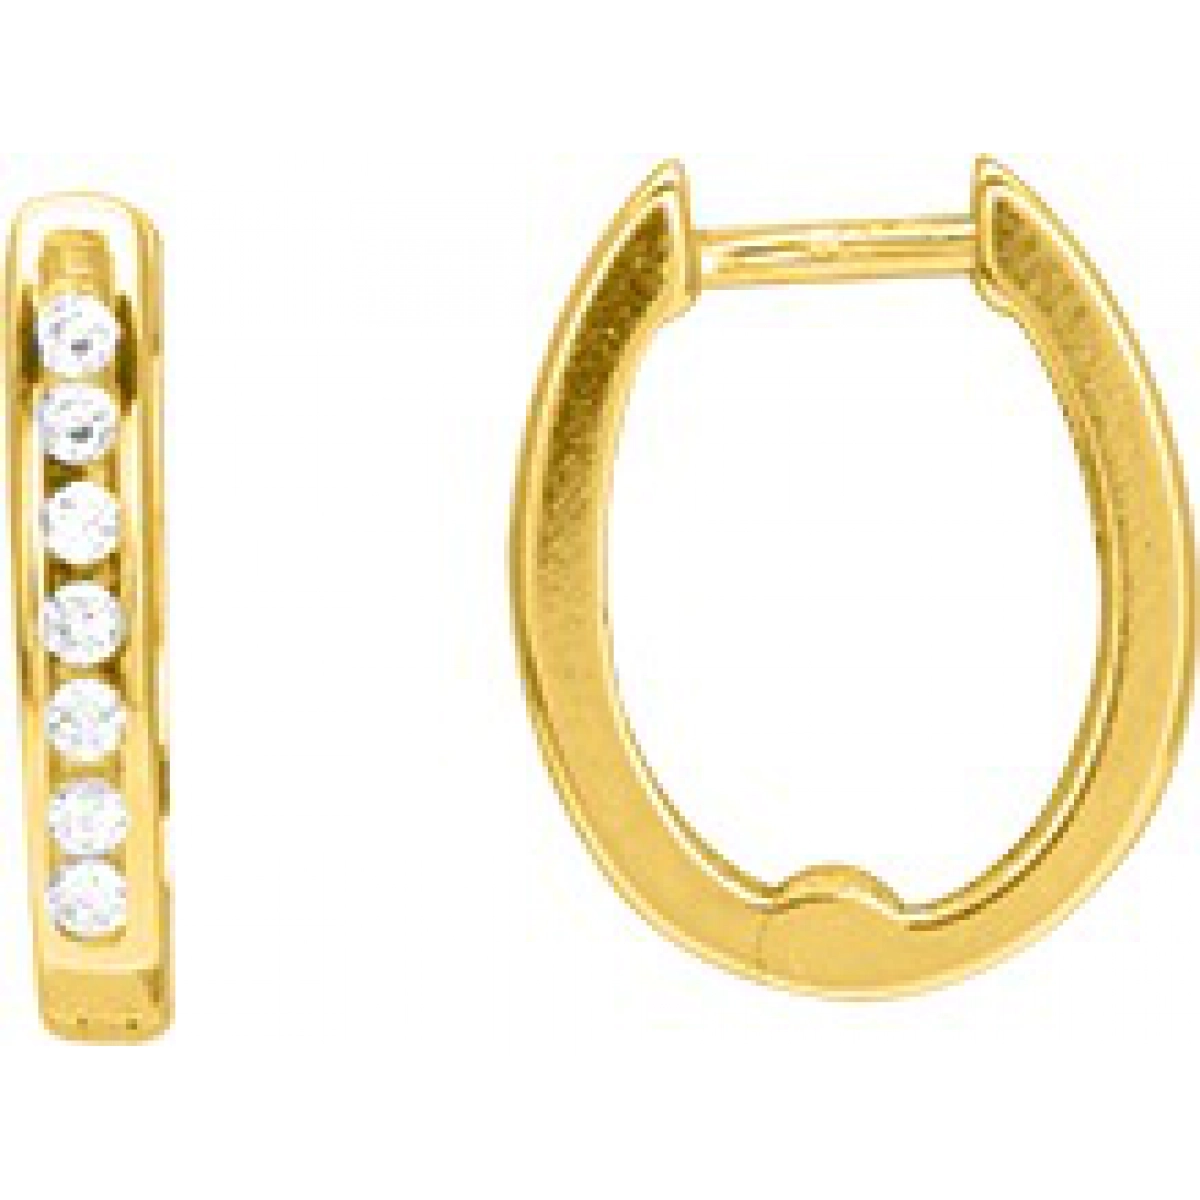 Earrings pair w. cz gold plated Brass Lua Blanca  228089.9 